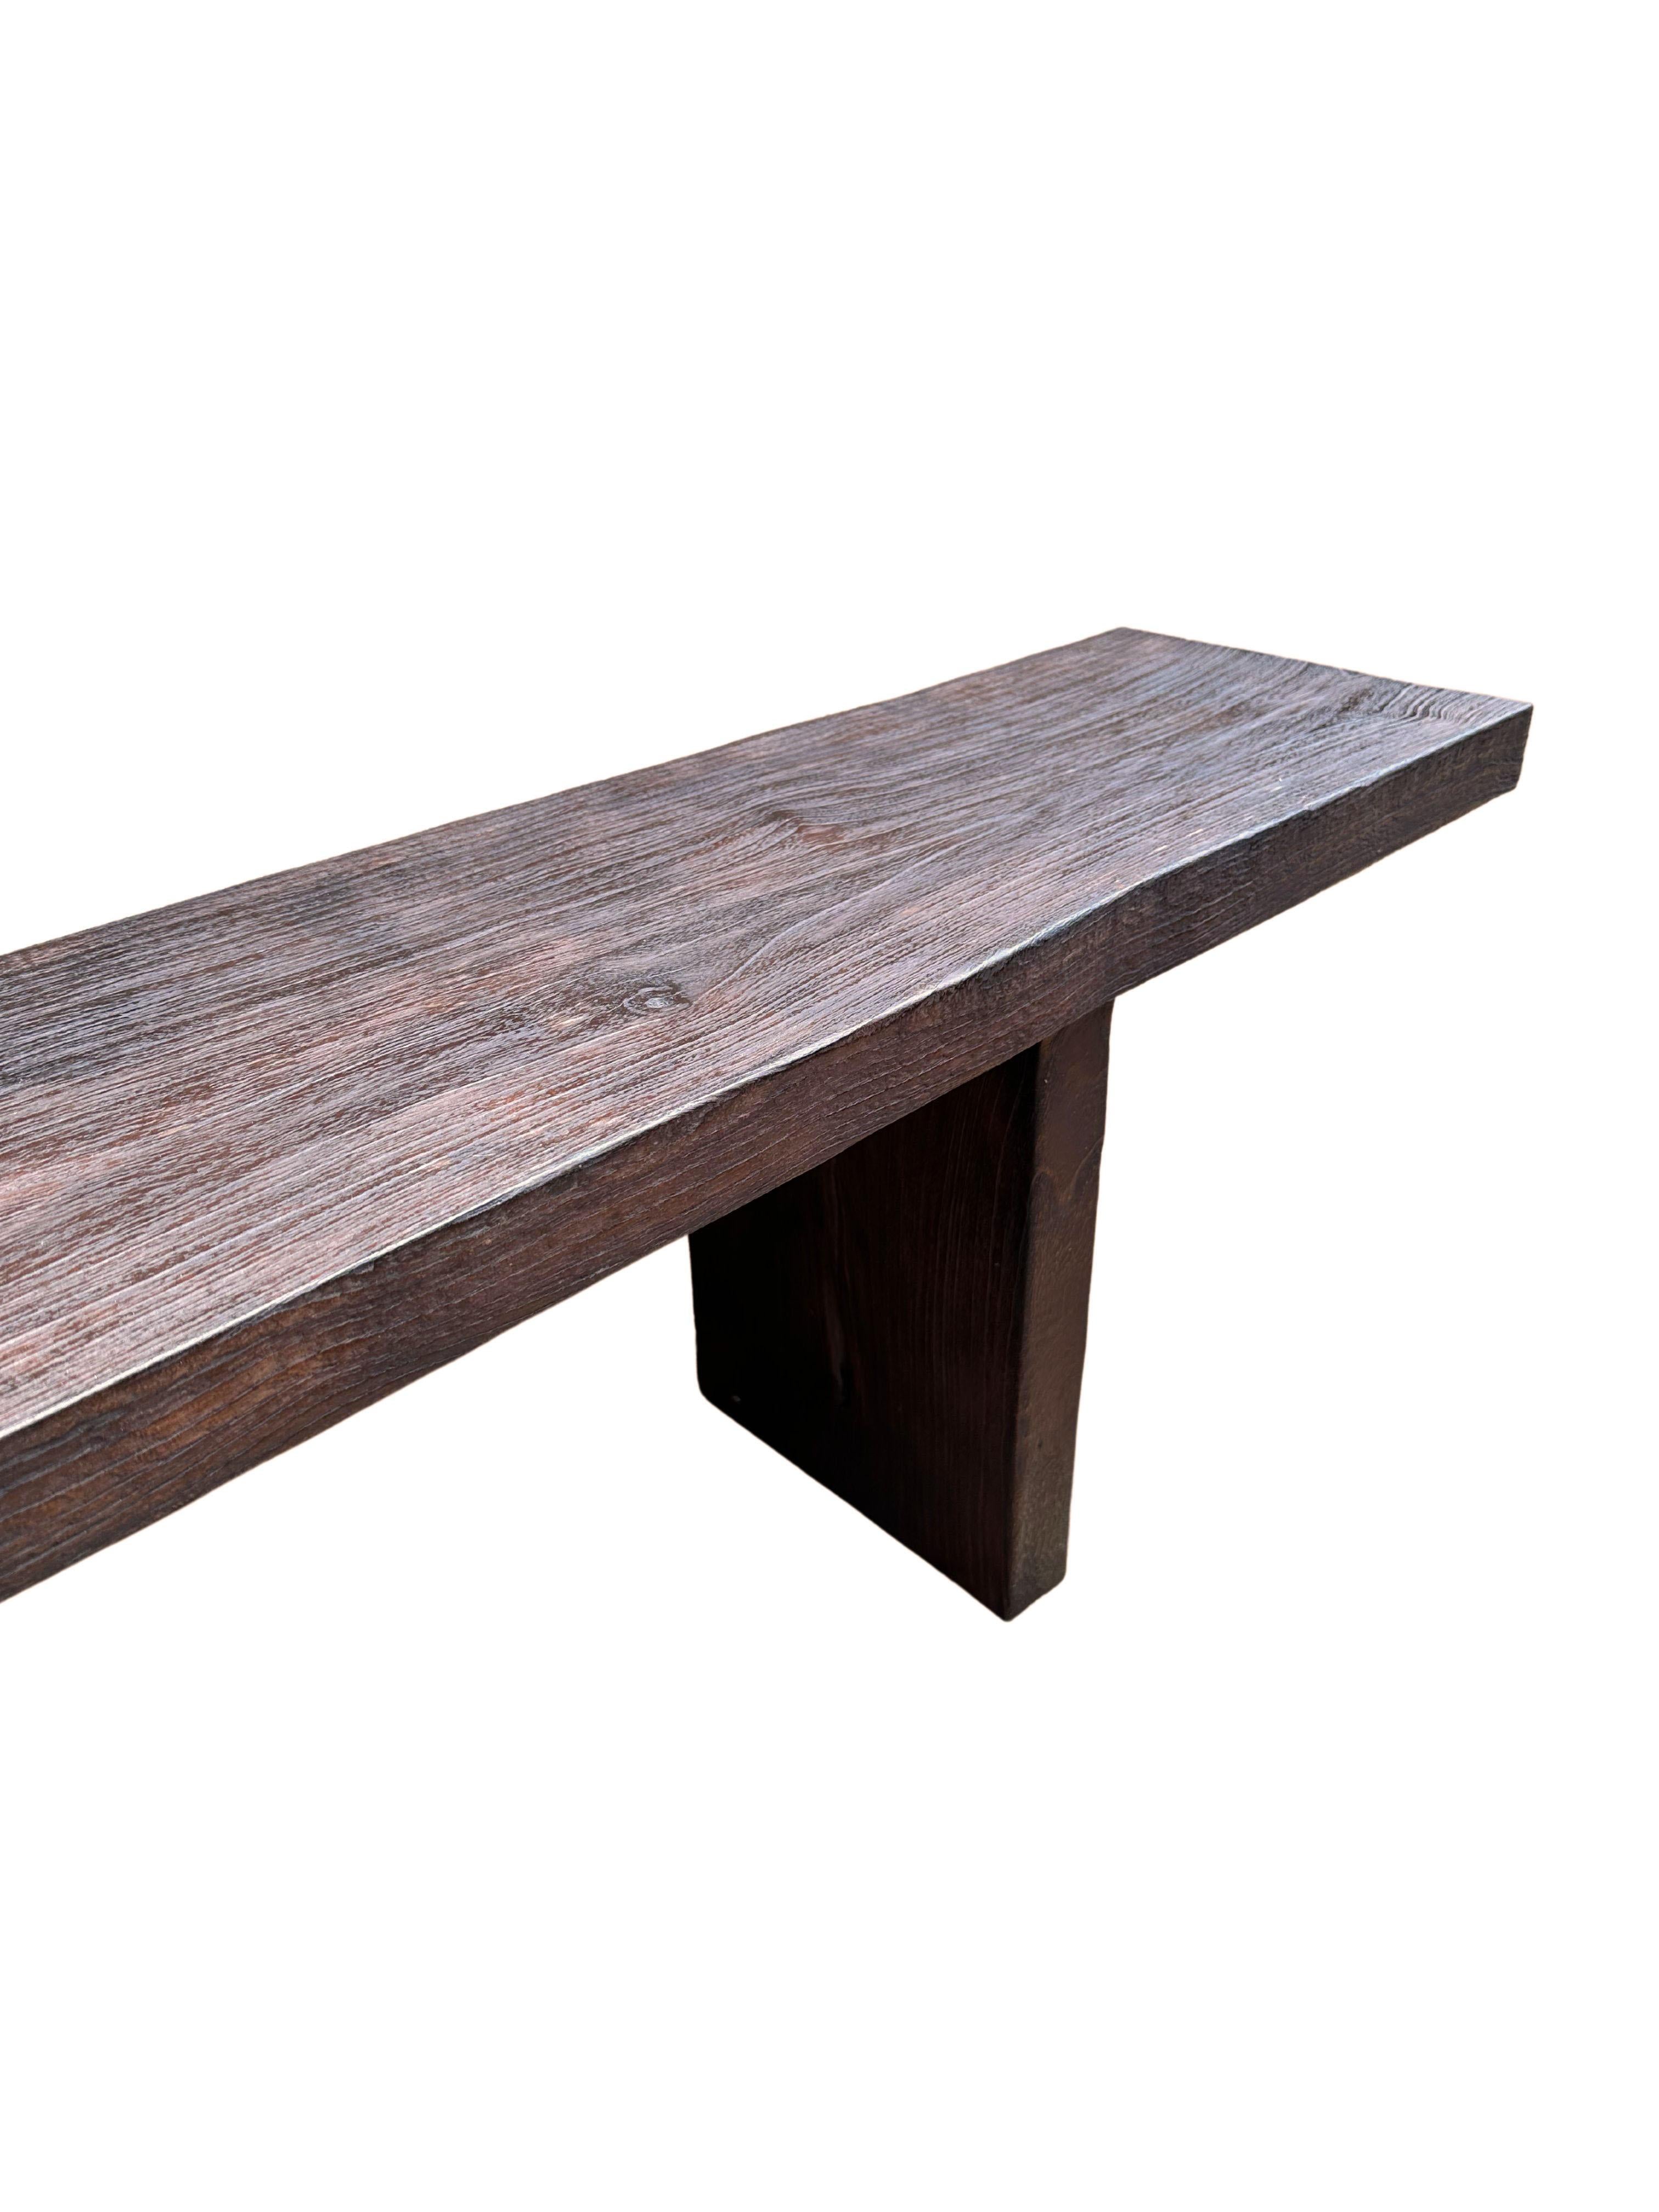 Other Sculptural Teak Wood Bench Modern Organic, Stunning Textures, Espresso Finish For Sale